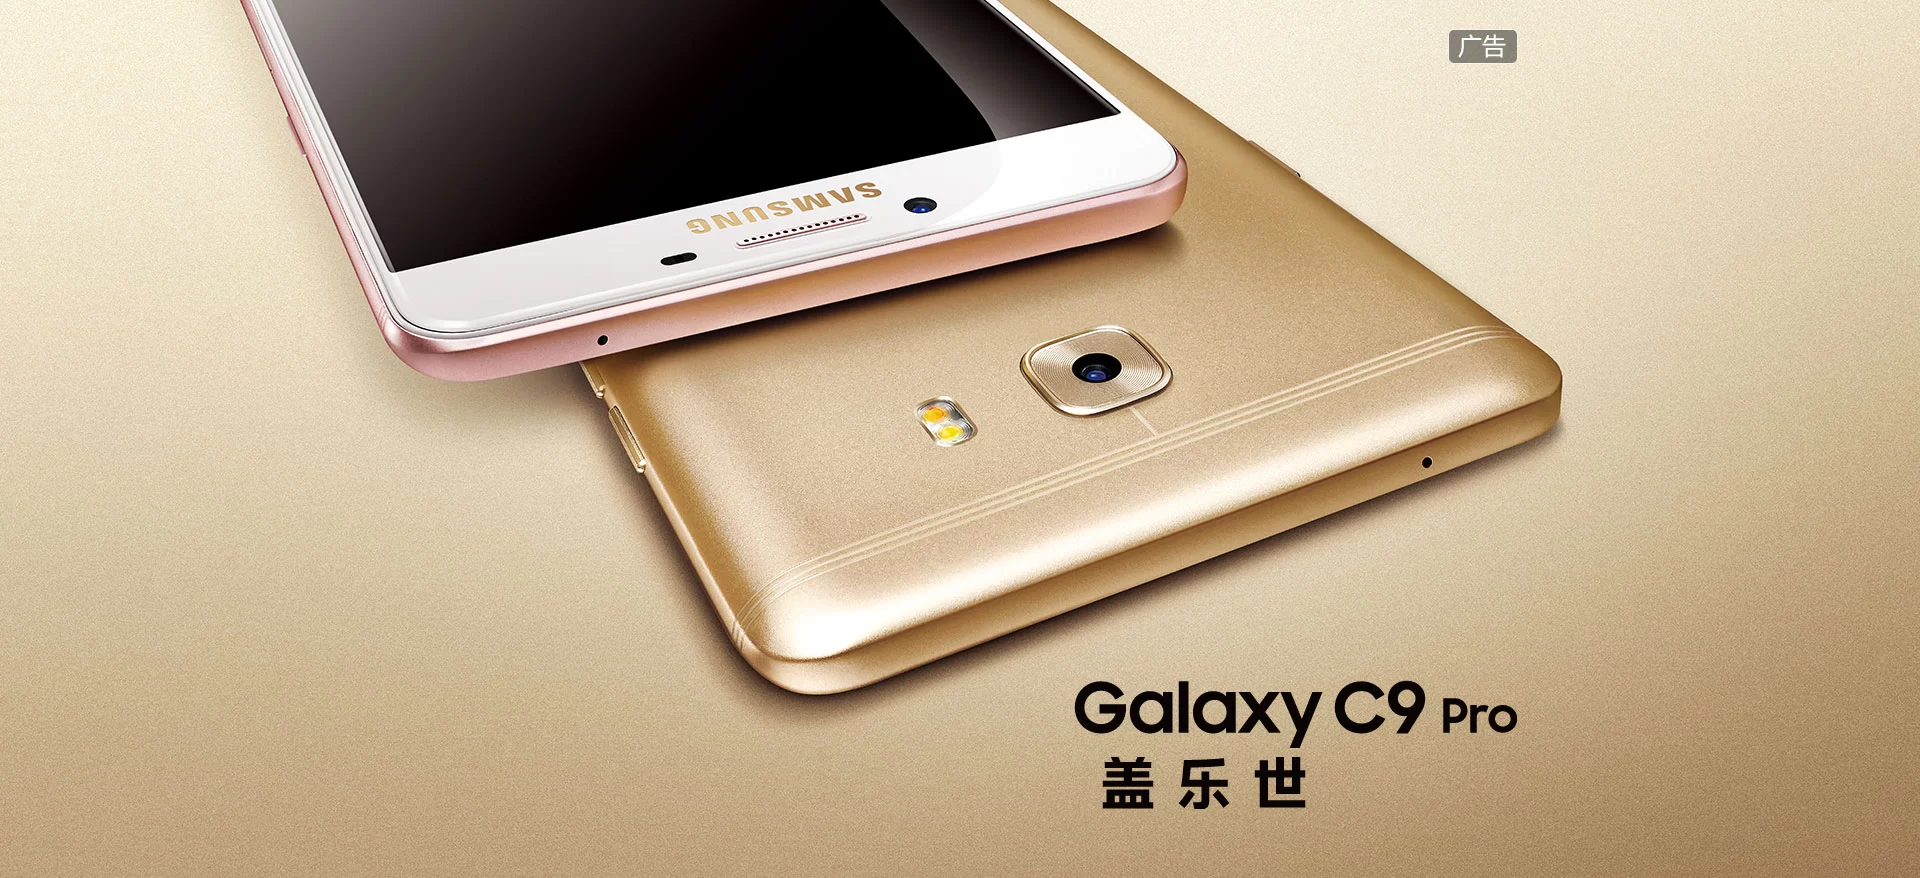 kv | Official | Samsung เปิดตัว Galaxy C9 Pro เล็งทำตลาดในจีนด้วยสมาร์ทโฟนรุ่นแรกของบริษัทที่มี RAM 6GB